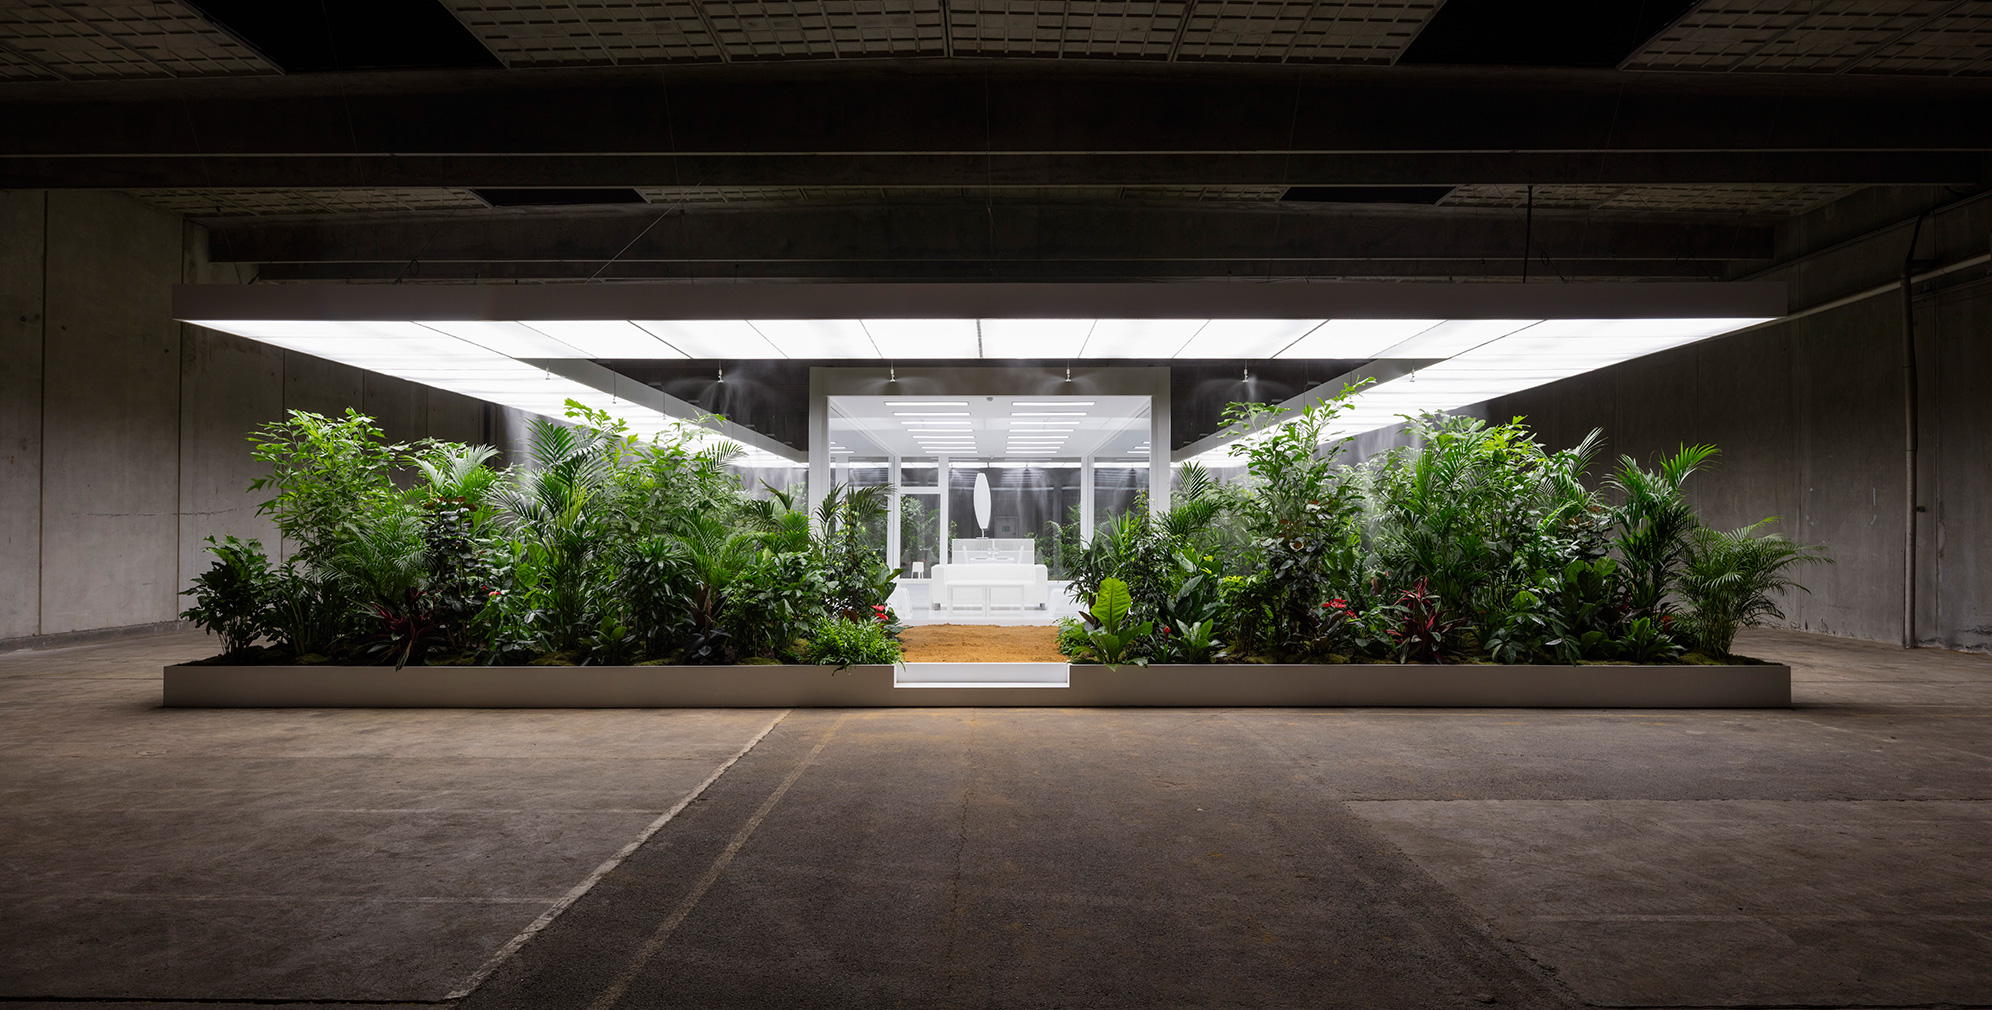 Doug Aitken's The Garden installation at ARoS Triennale in Aarhus